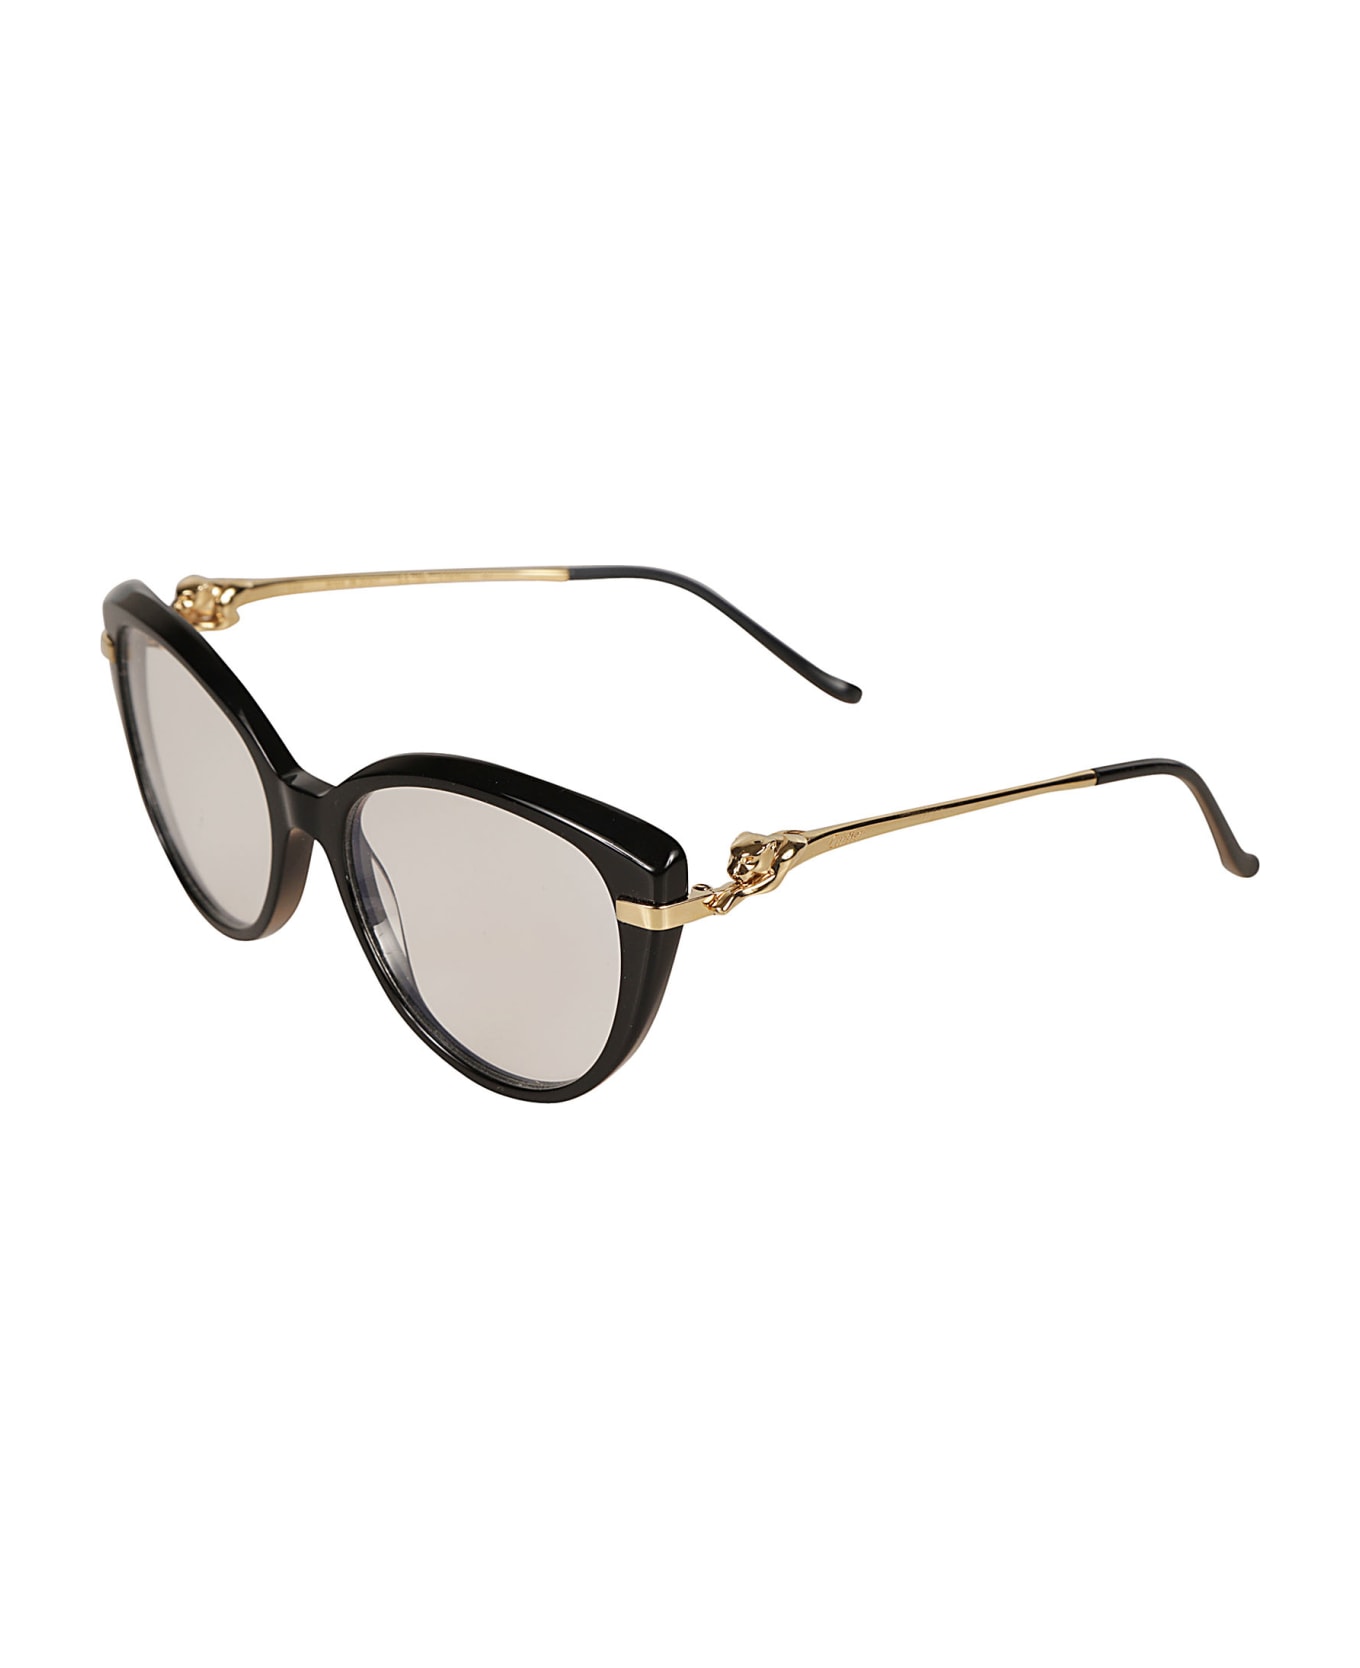 Cartier Eyewear Round Cat-eye Sunglasses Sunglasses - black-gold